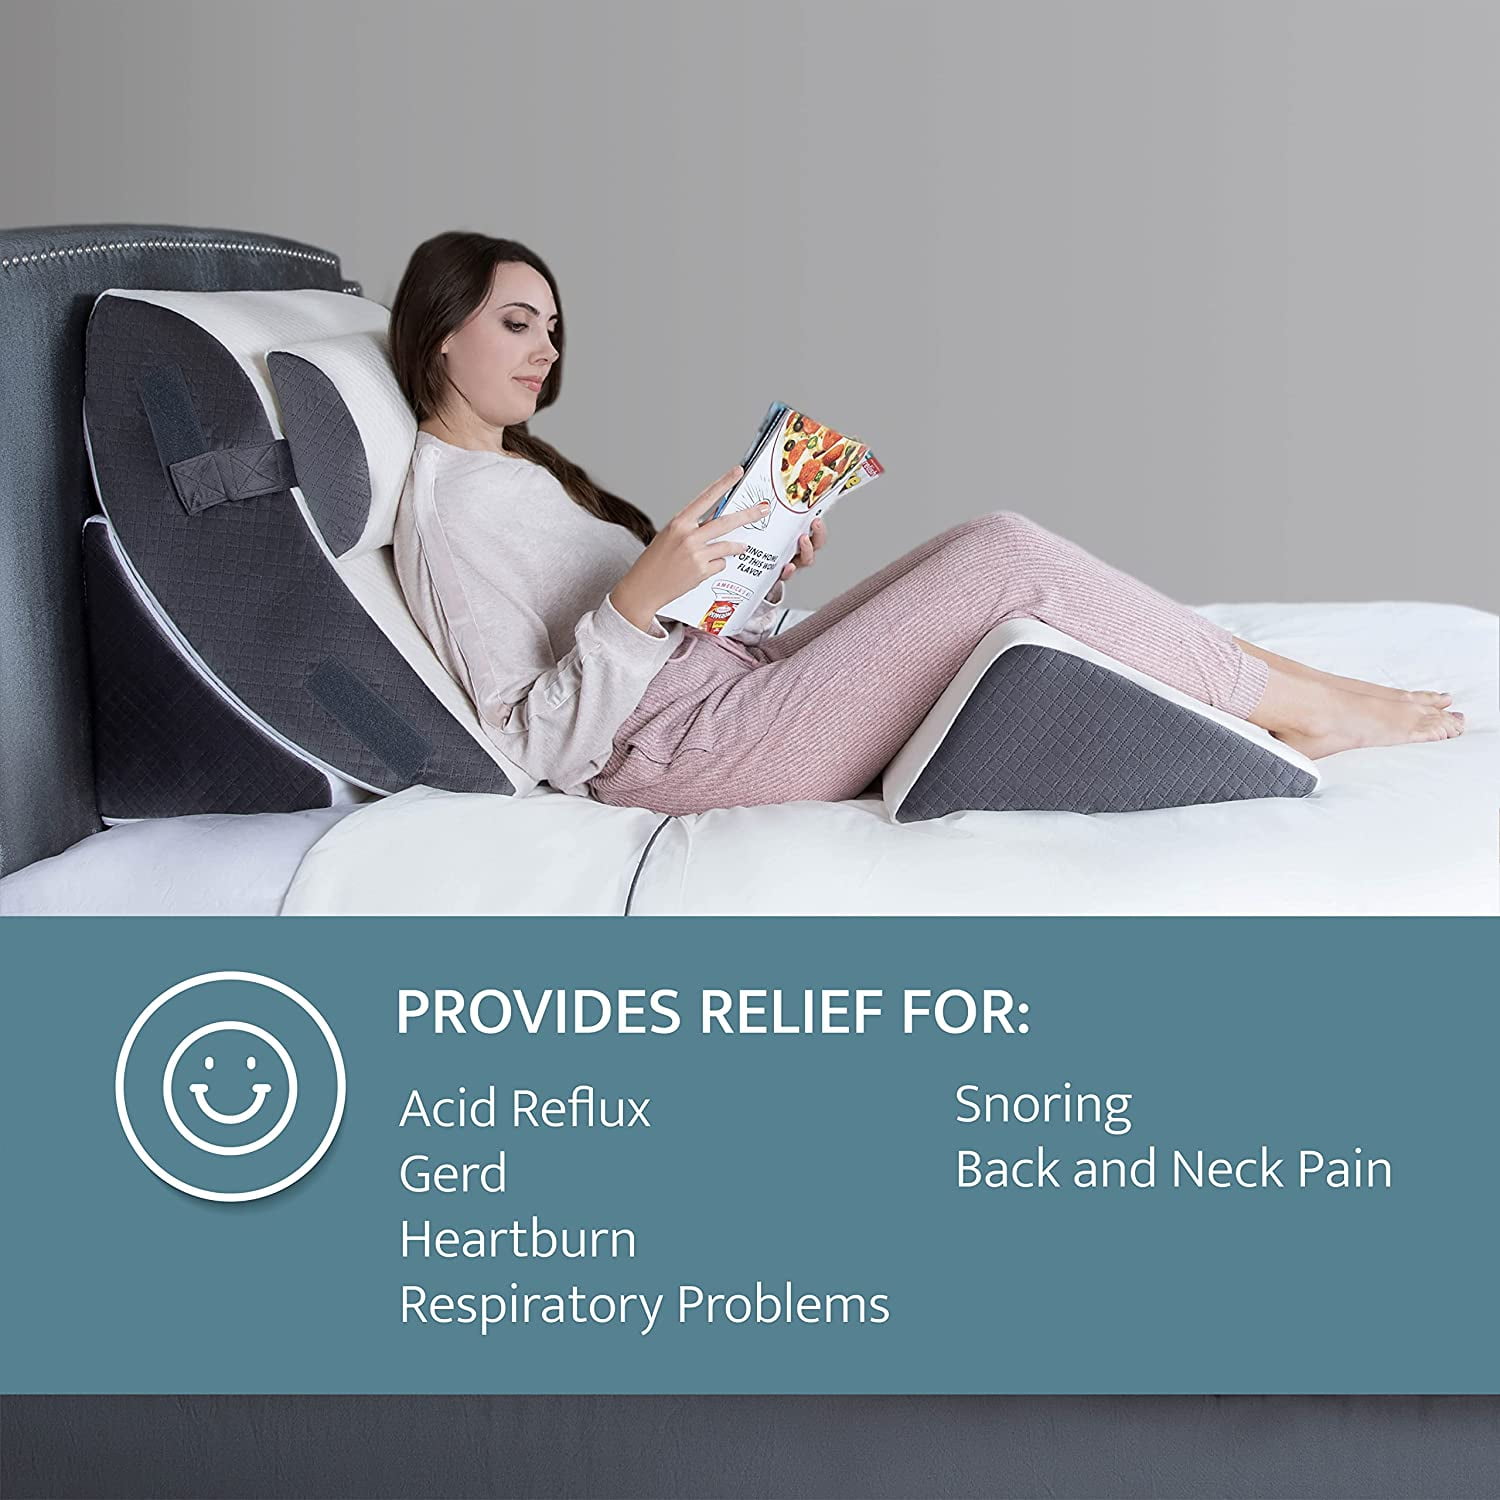 Kingfun 4pcs Orthopedic Bed Wedge Pillow Set, Post Surgery Memory Foam Wedge  Pillows for Sleeping, Adjustable Leg, Back Support, Sleep Apnea, Snoring,  Arm, Acid Reflux Pillow for Pain Relief, Grey 